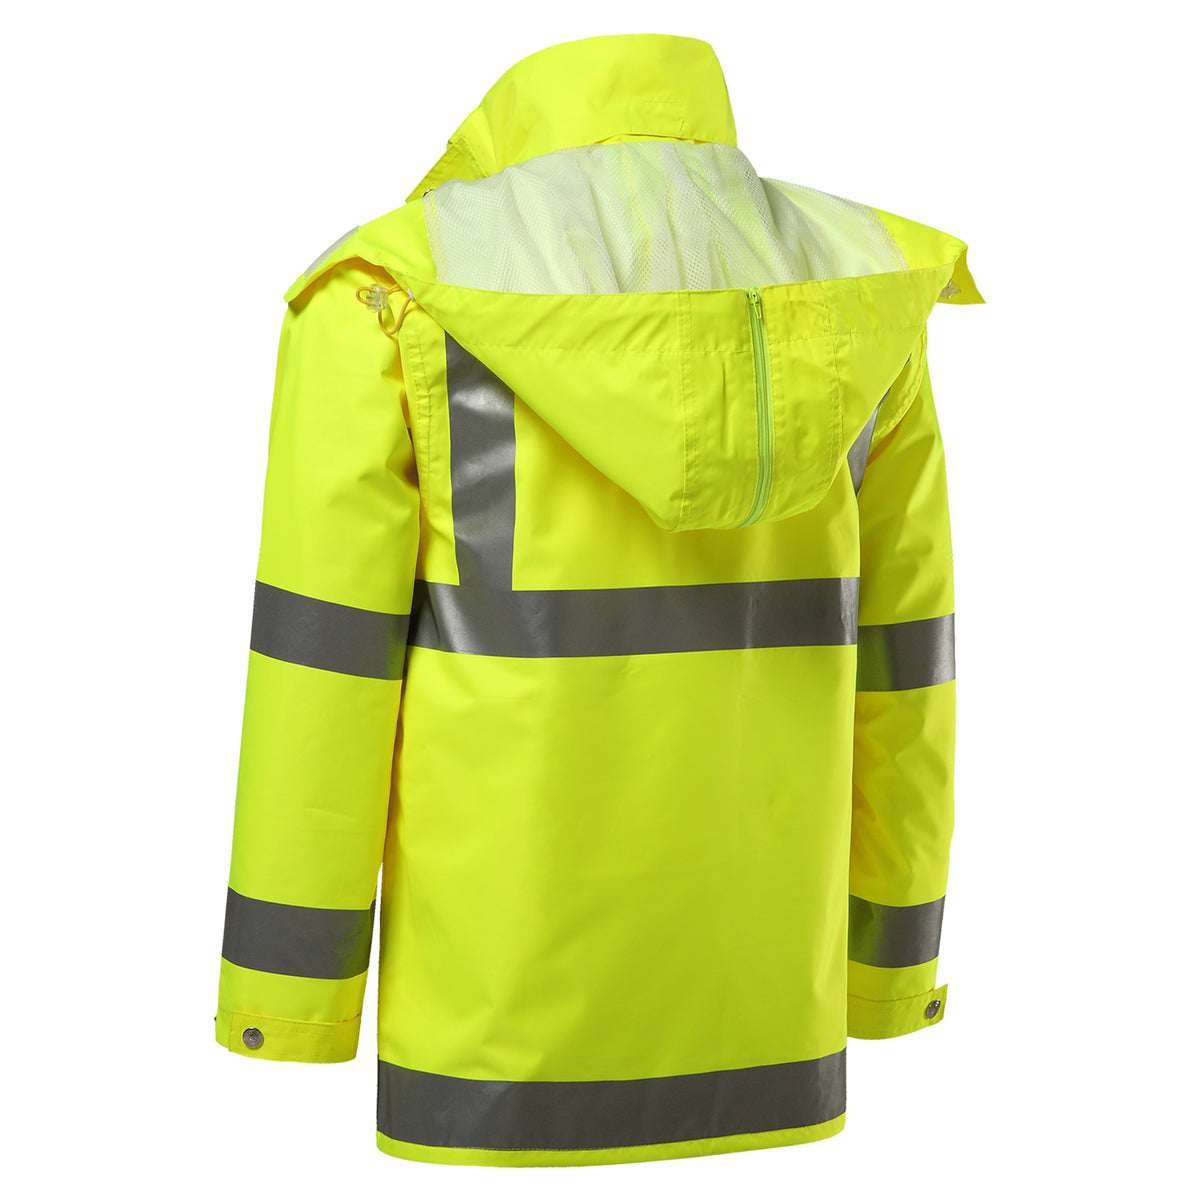 iCreek Safety Jacket for Men & Women Reflective Rain Jacket High Visibility Waterproof Raincoat Anti-Storm